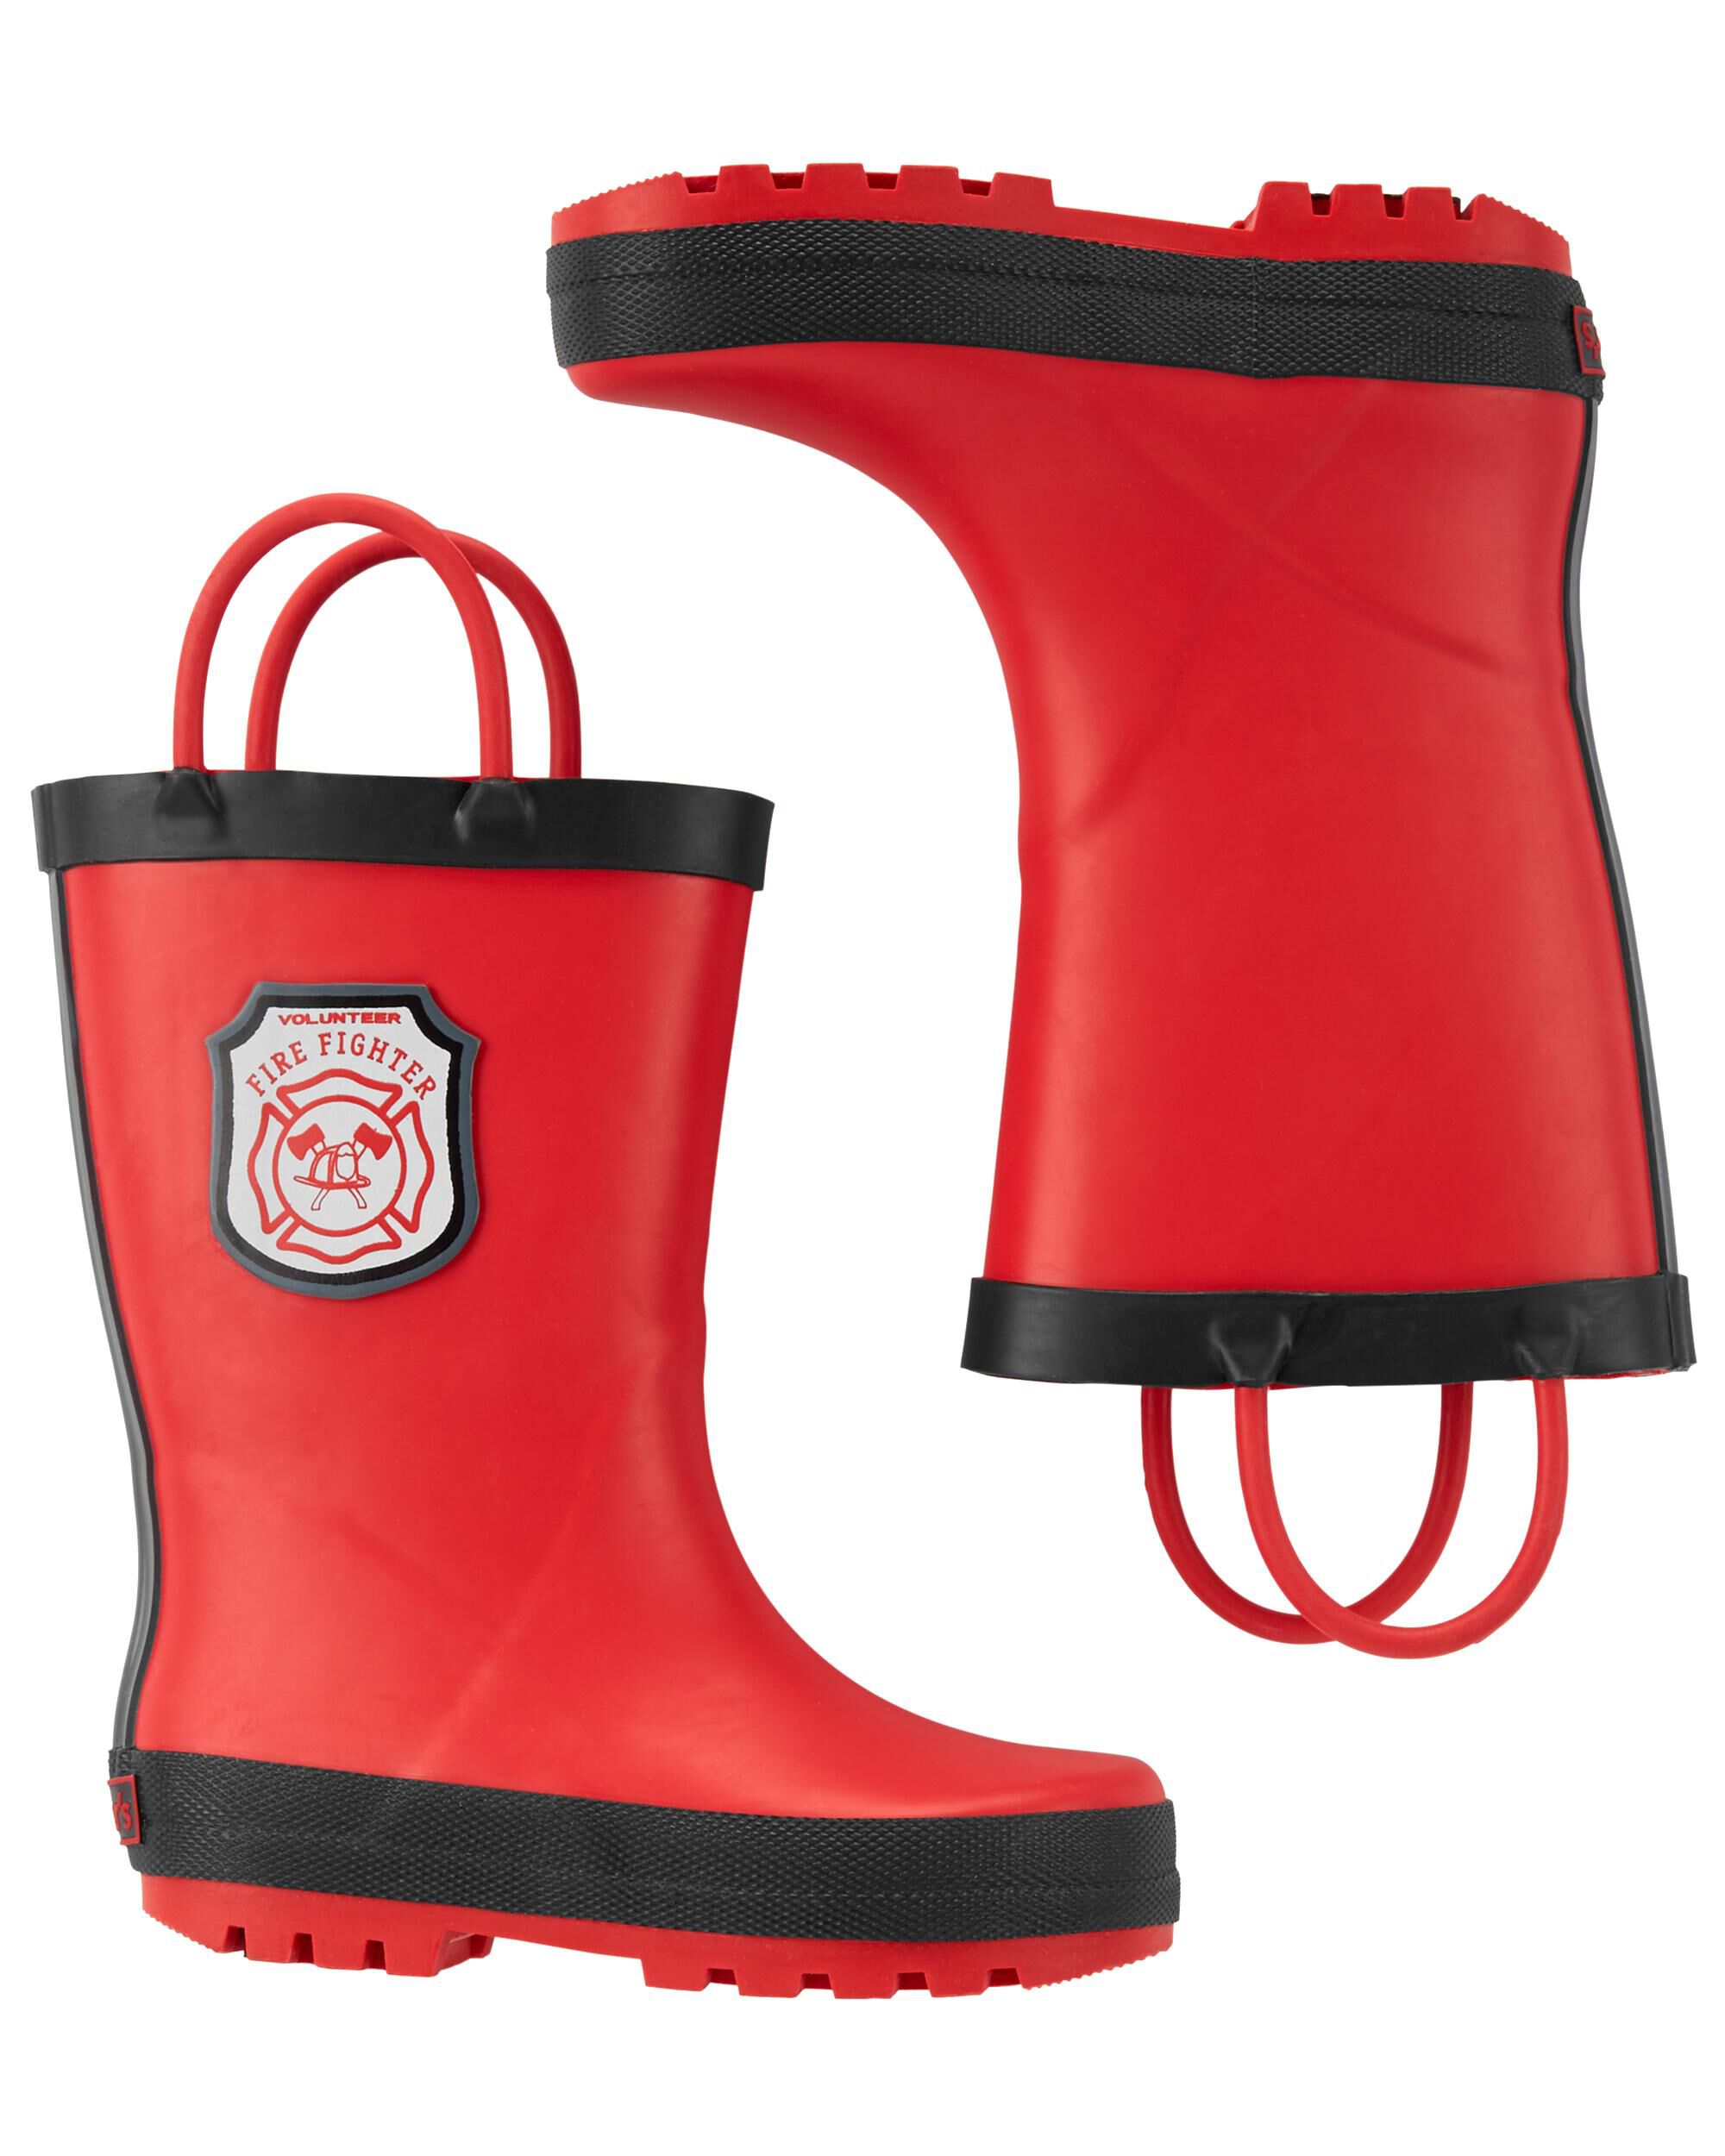 kids fireman rain boots